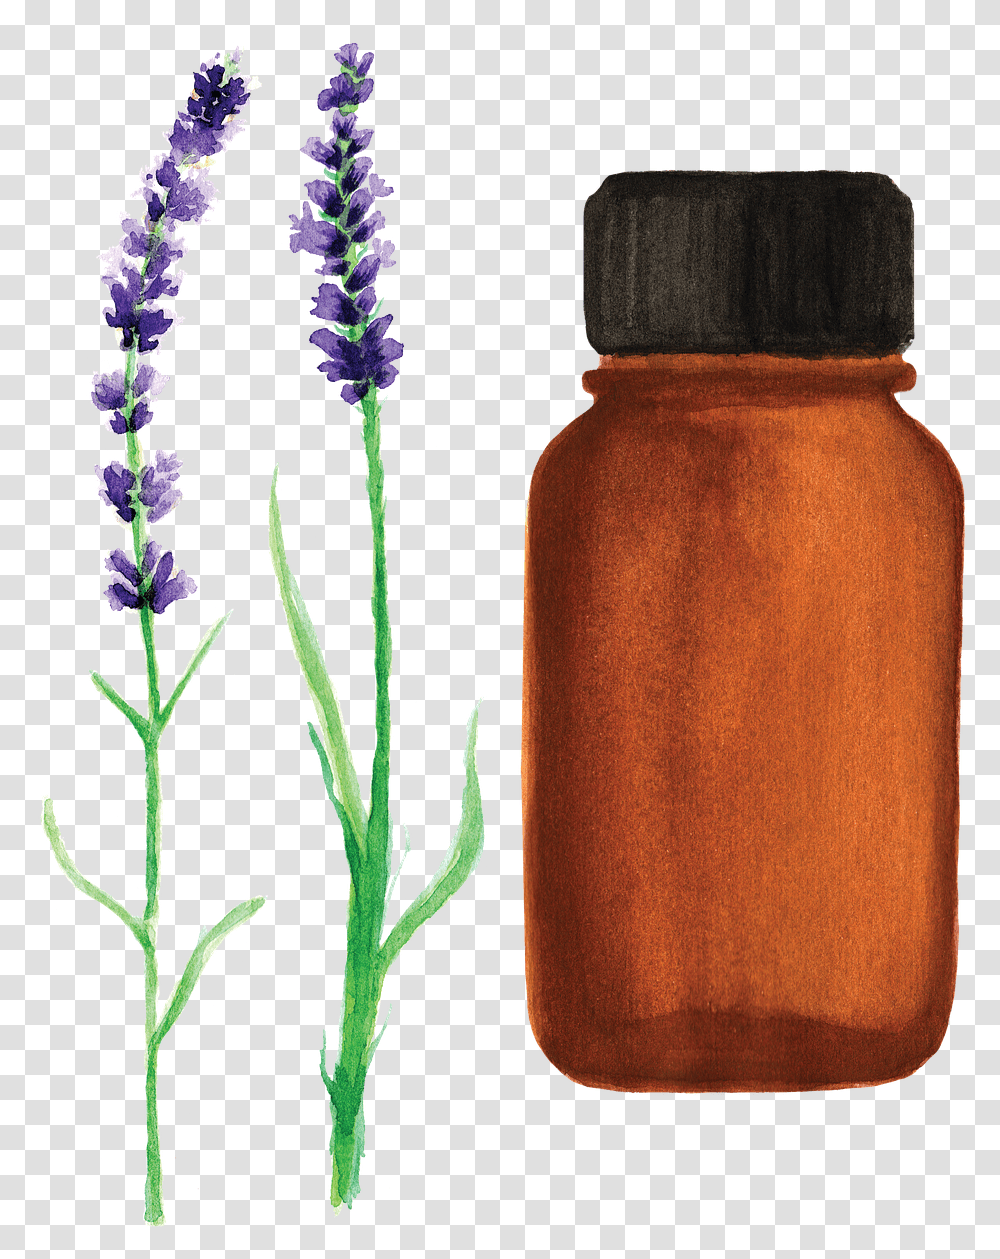 Essential Oil Lavender Watercolor Free Image On Pixabay Essential Oil Bottle Watercolor, Plant, Flower, Blossom, Pollen Transparent Png